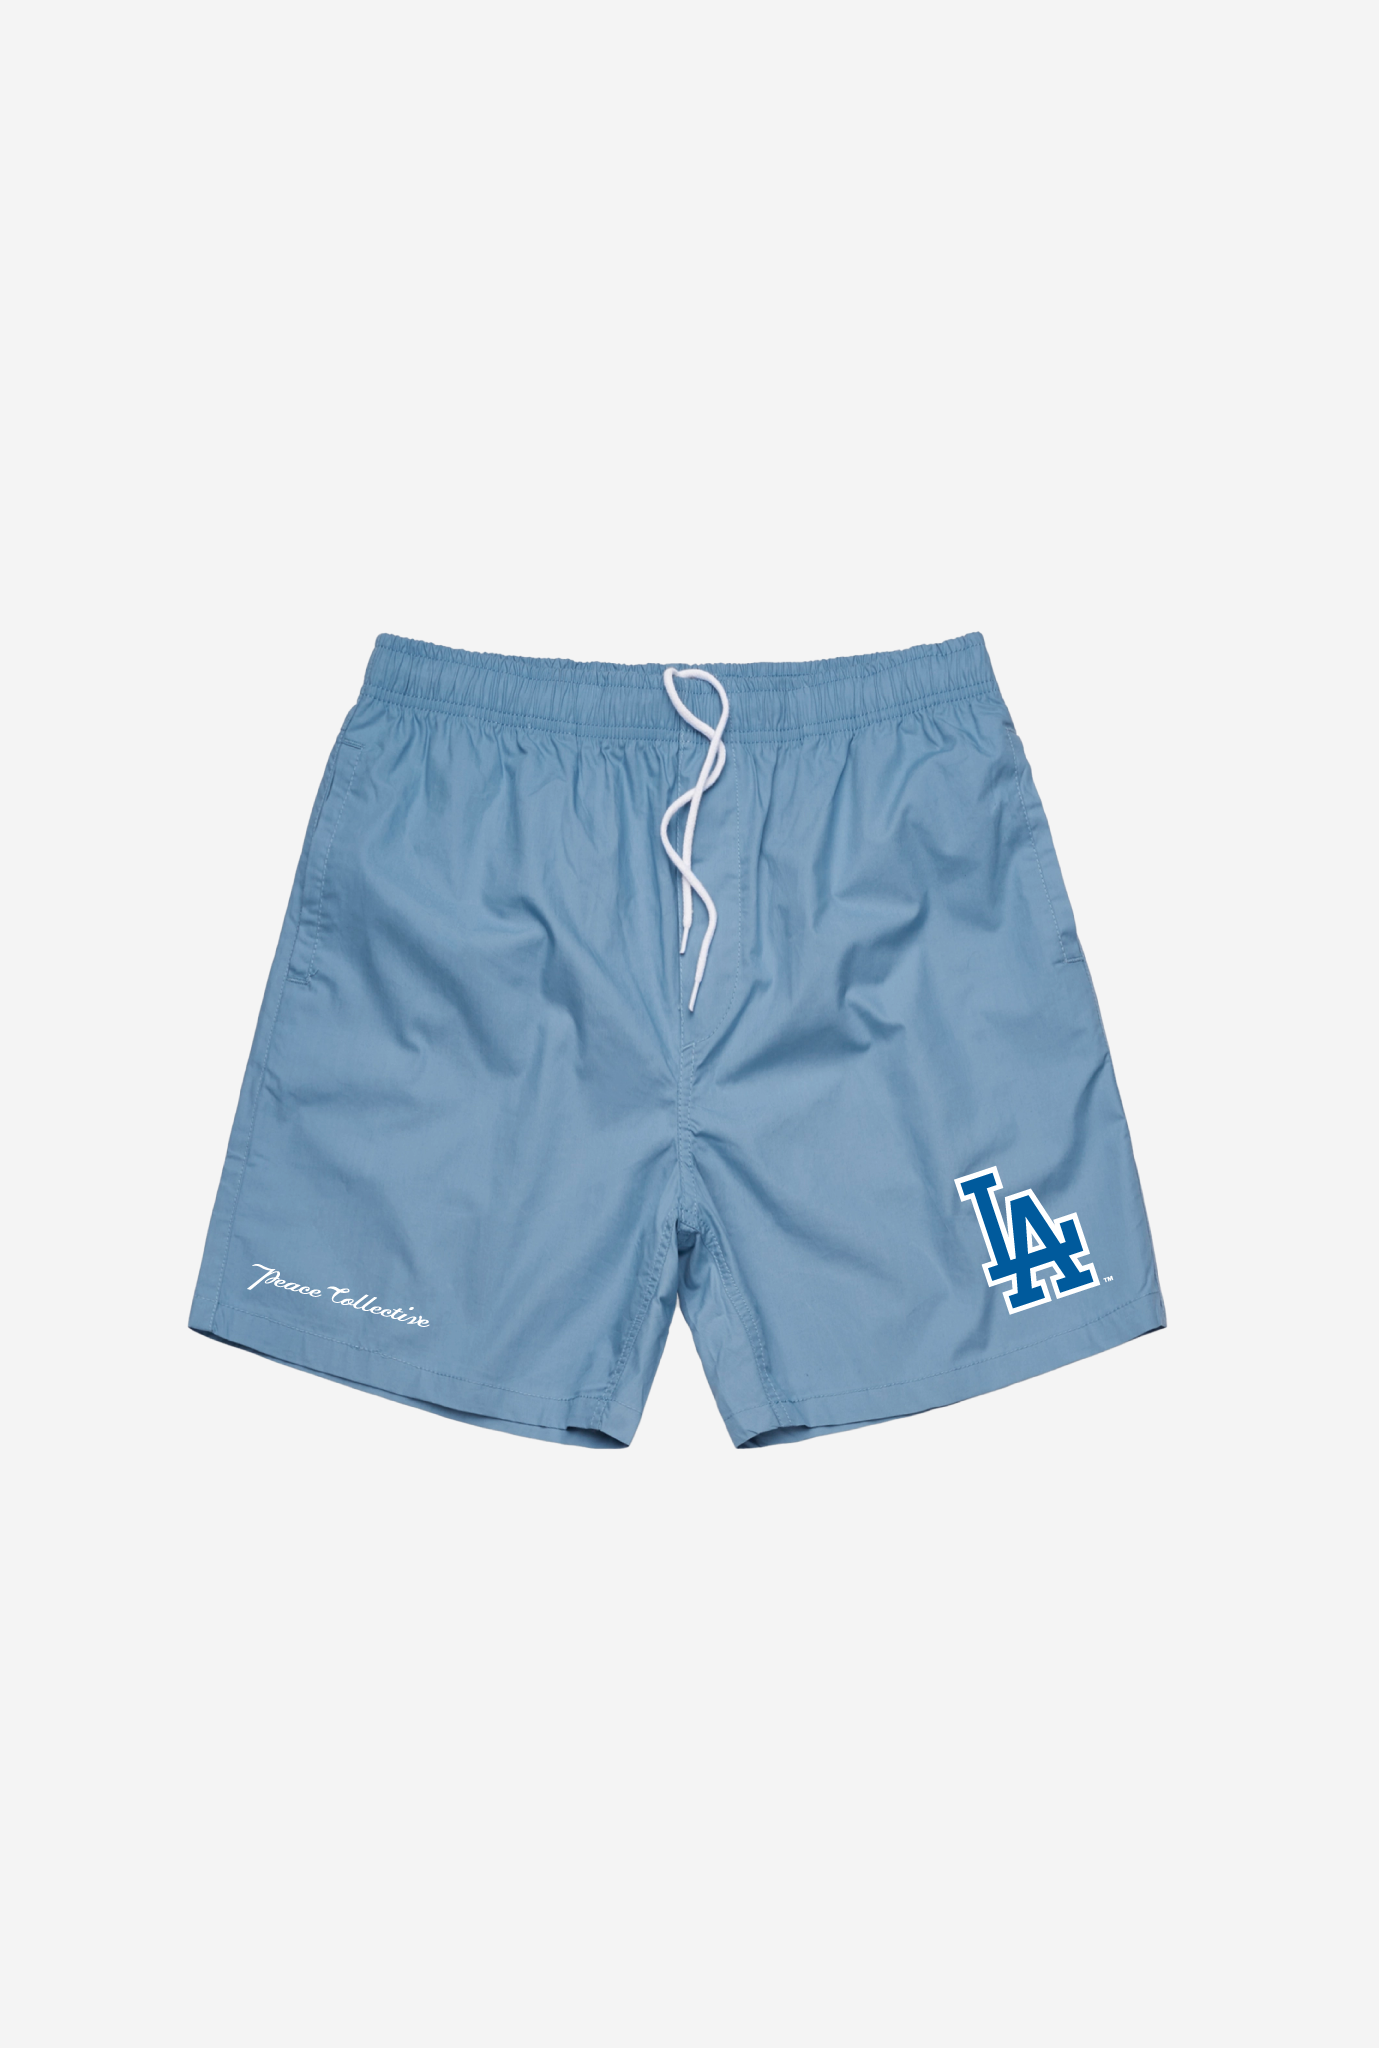 Los Angeles Dodgers Shorts - Powder Blue